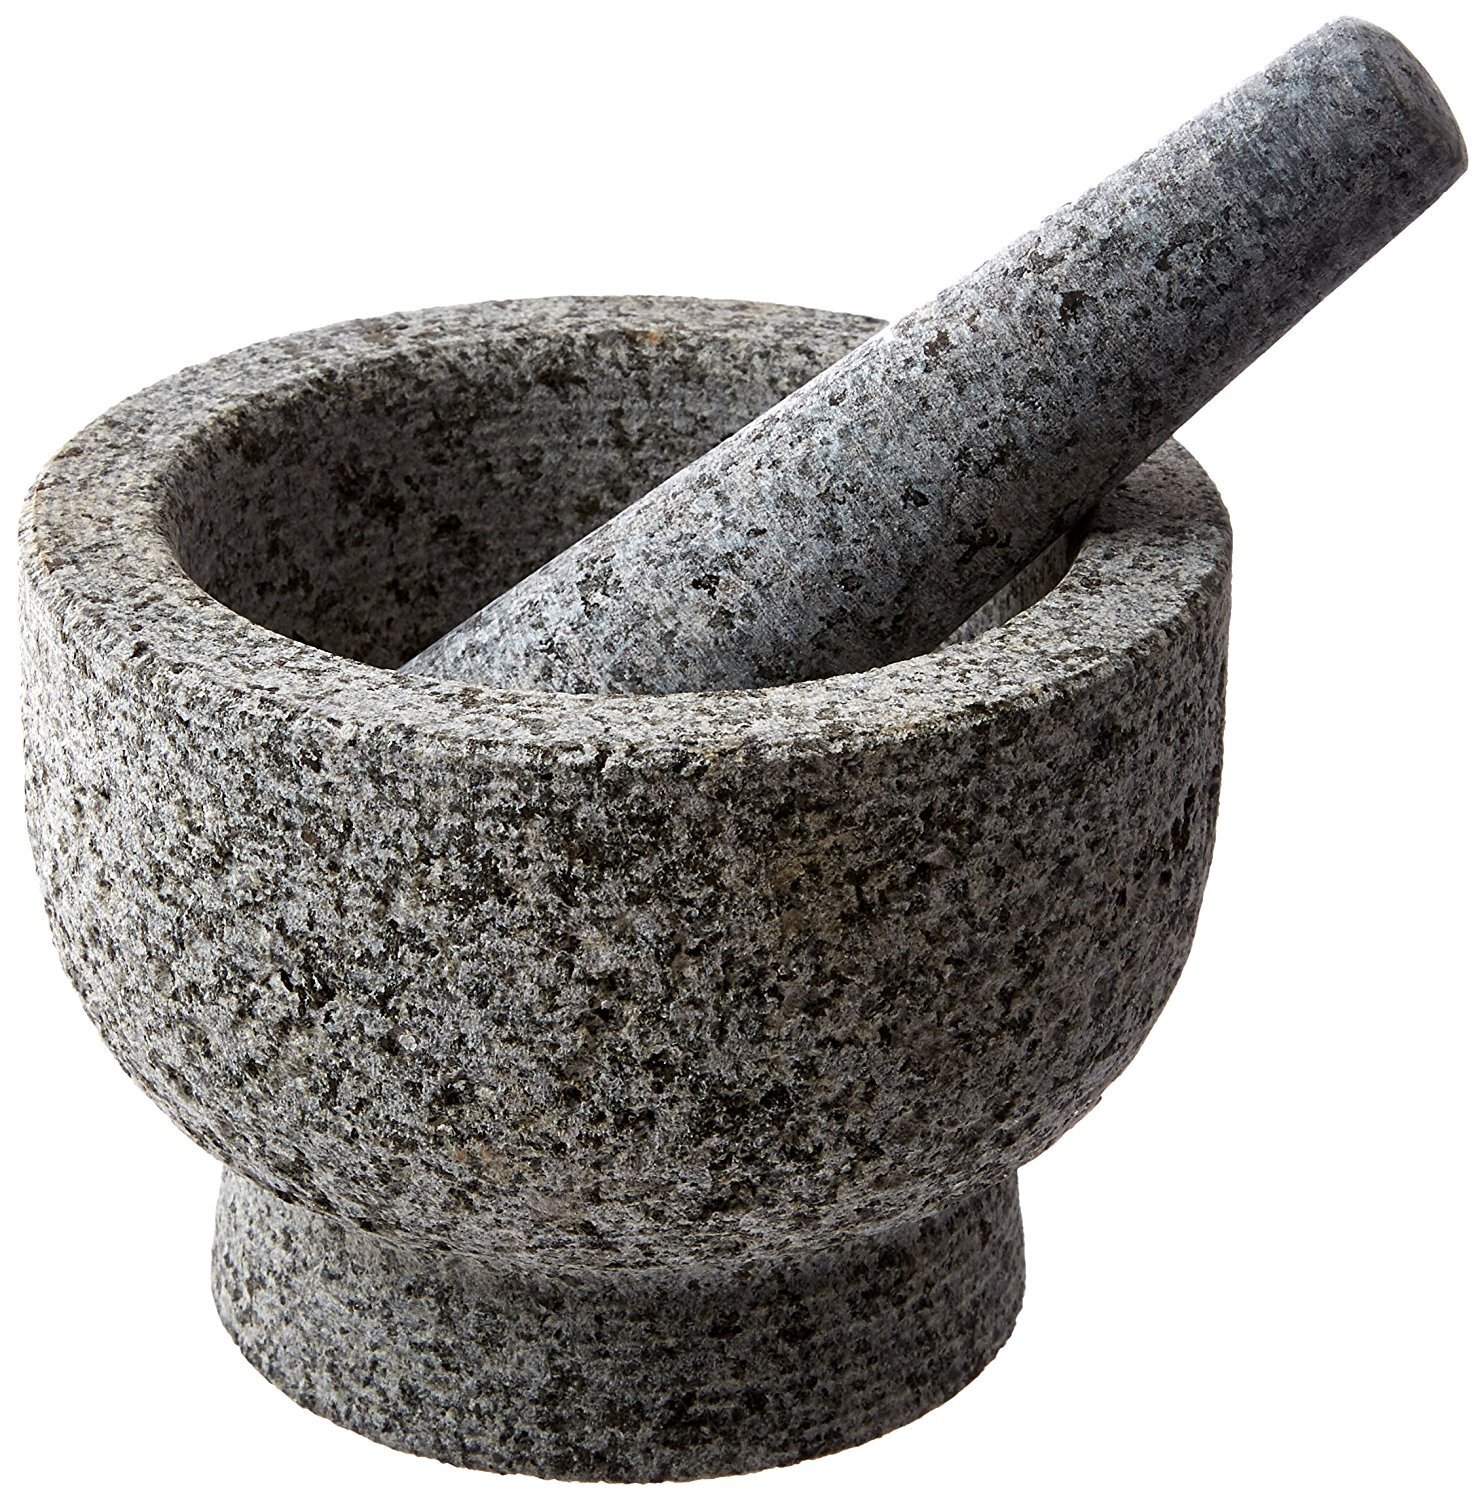 Mortar and Pestle Set Unpolished Granite Bowl with Bonus Garlic Peeler 